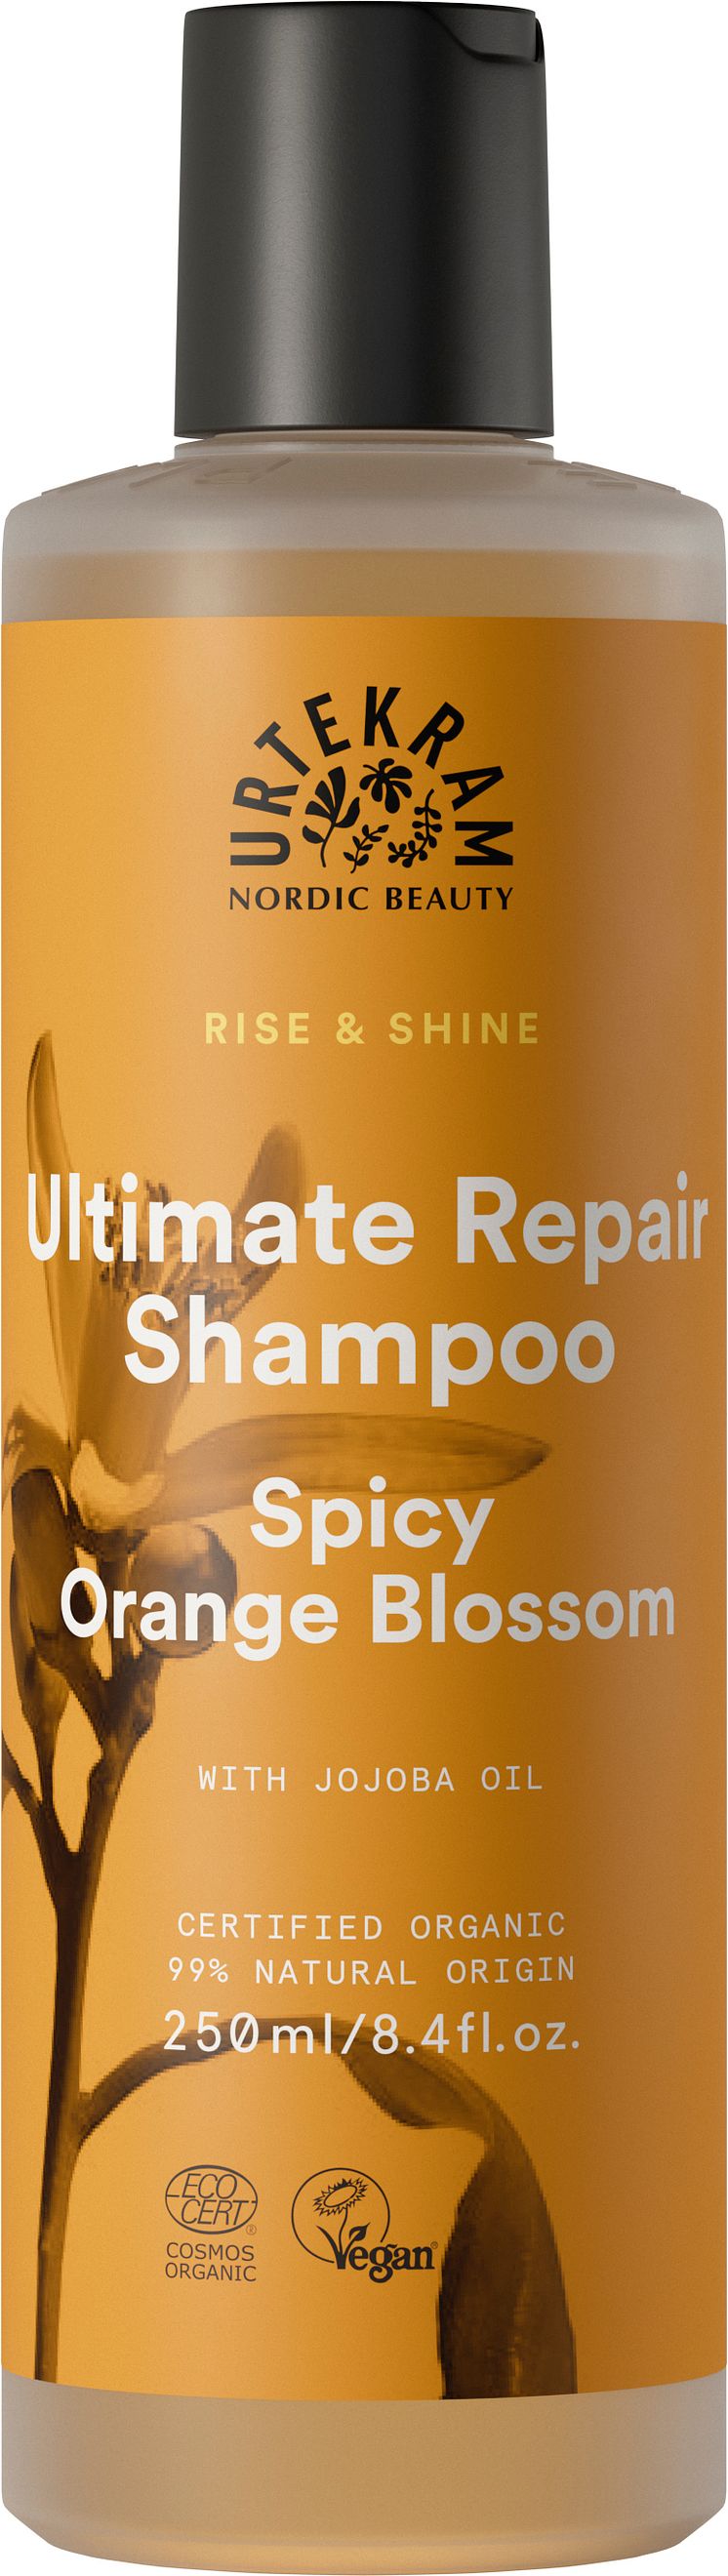 RISE & SHINE Shampoo